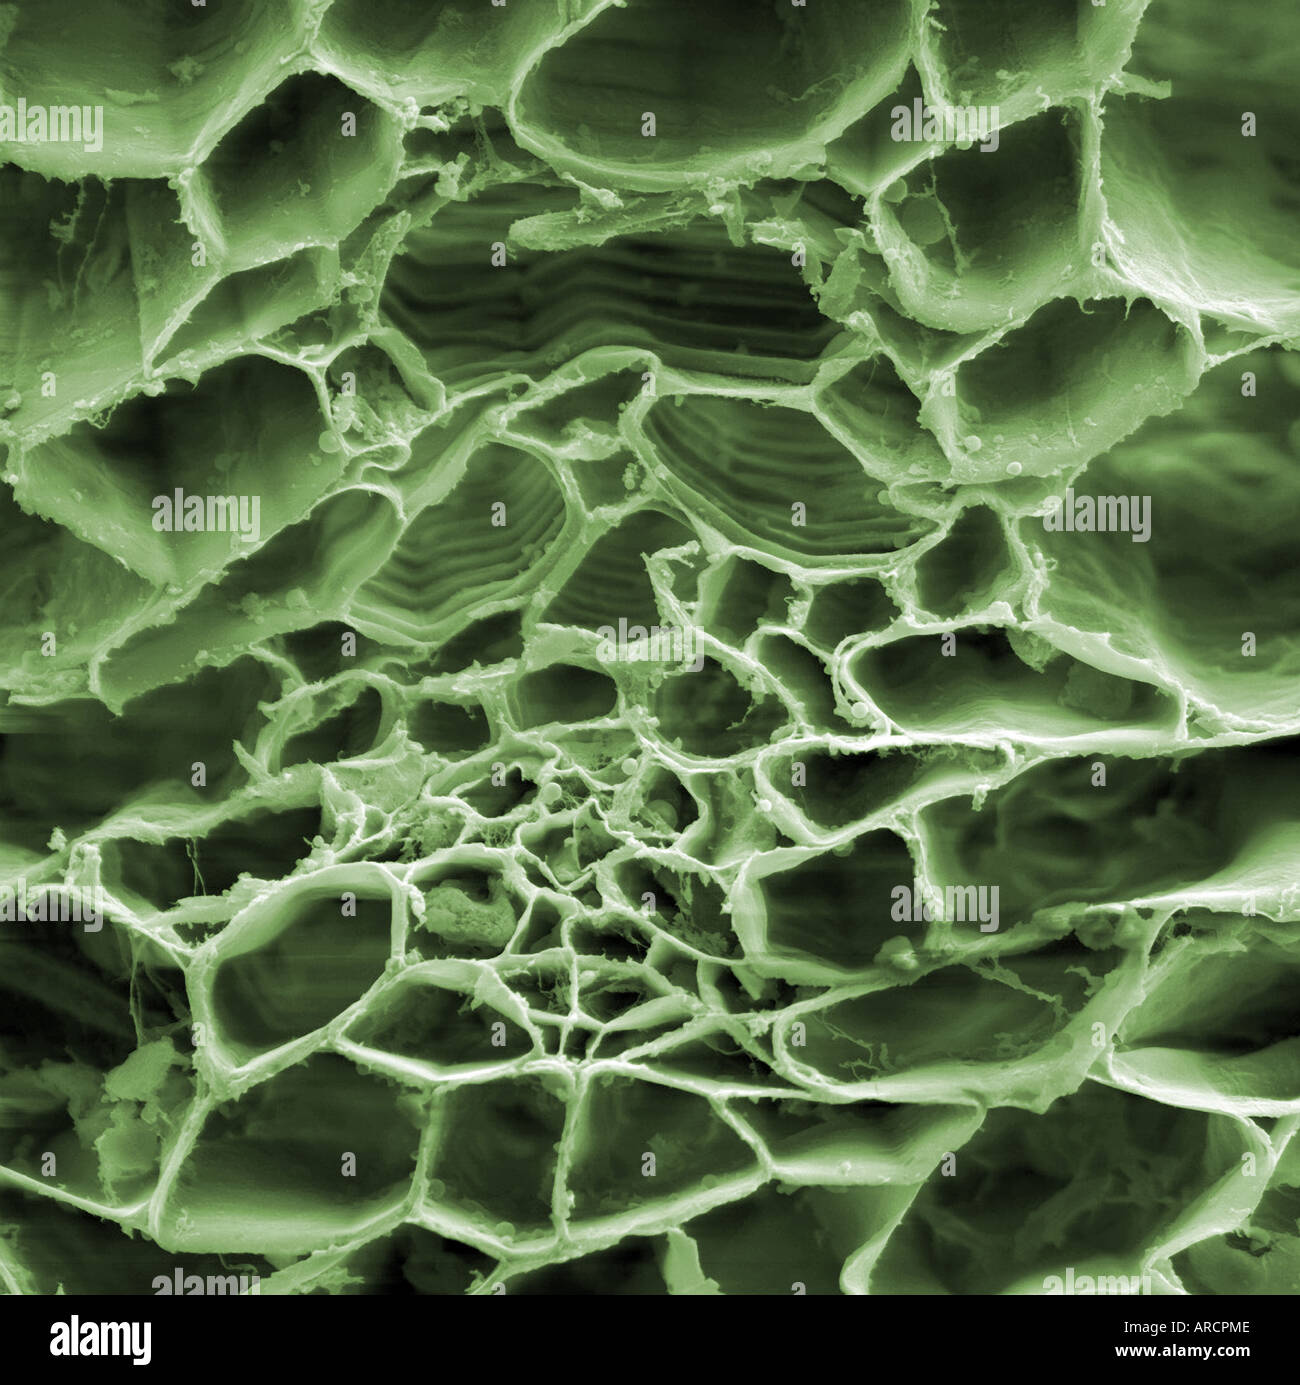 Hohe Vergrößerung Rasterelektronenmikroskop Bild eine Tradescantia (Virginia Dreimasterblume) Stockfoto